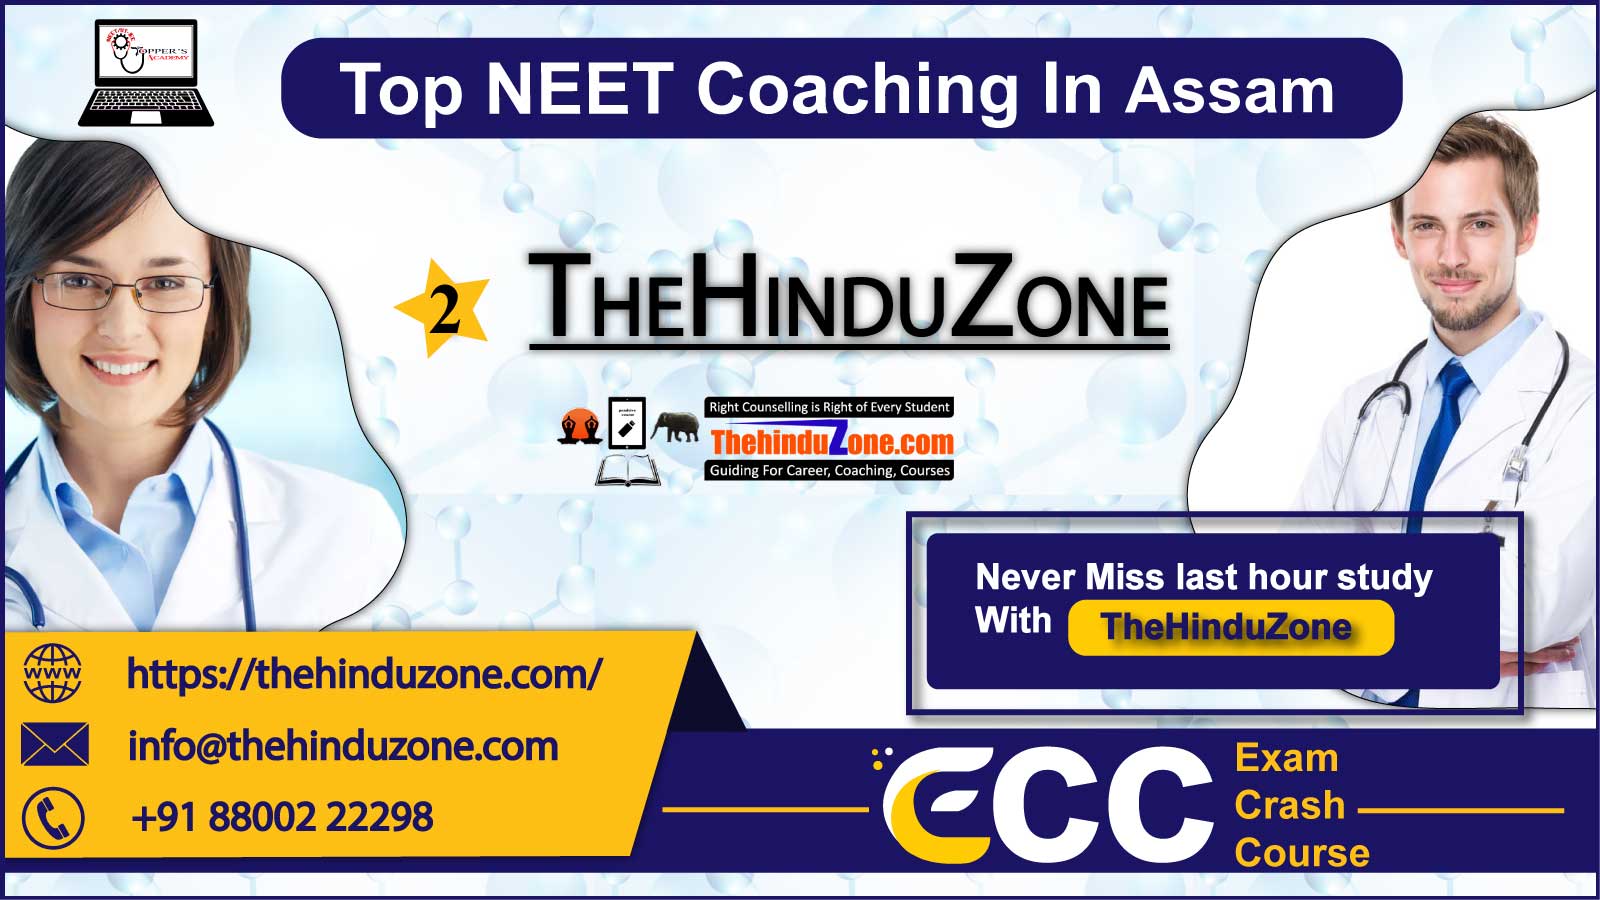 Thehinduzone NEET Coaching Institute In Assam - TheHinduZone